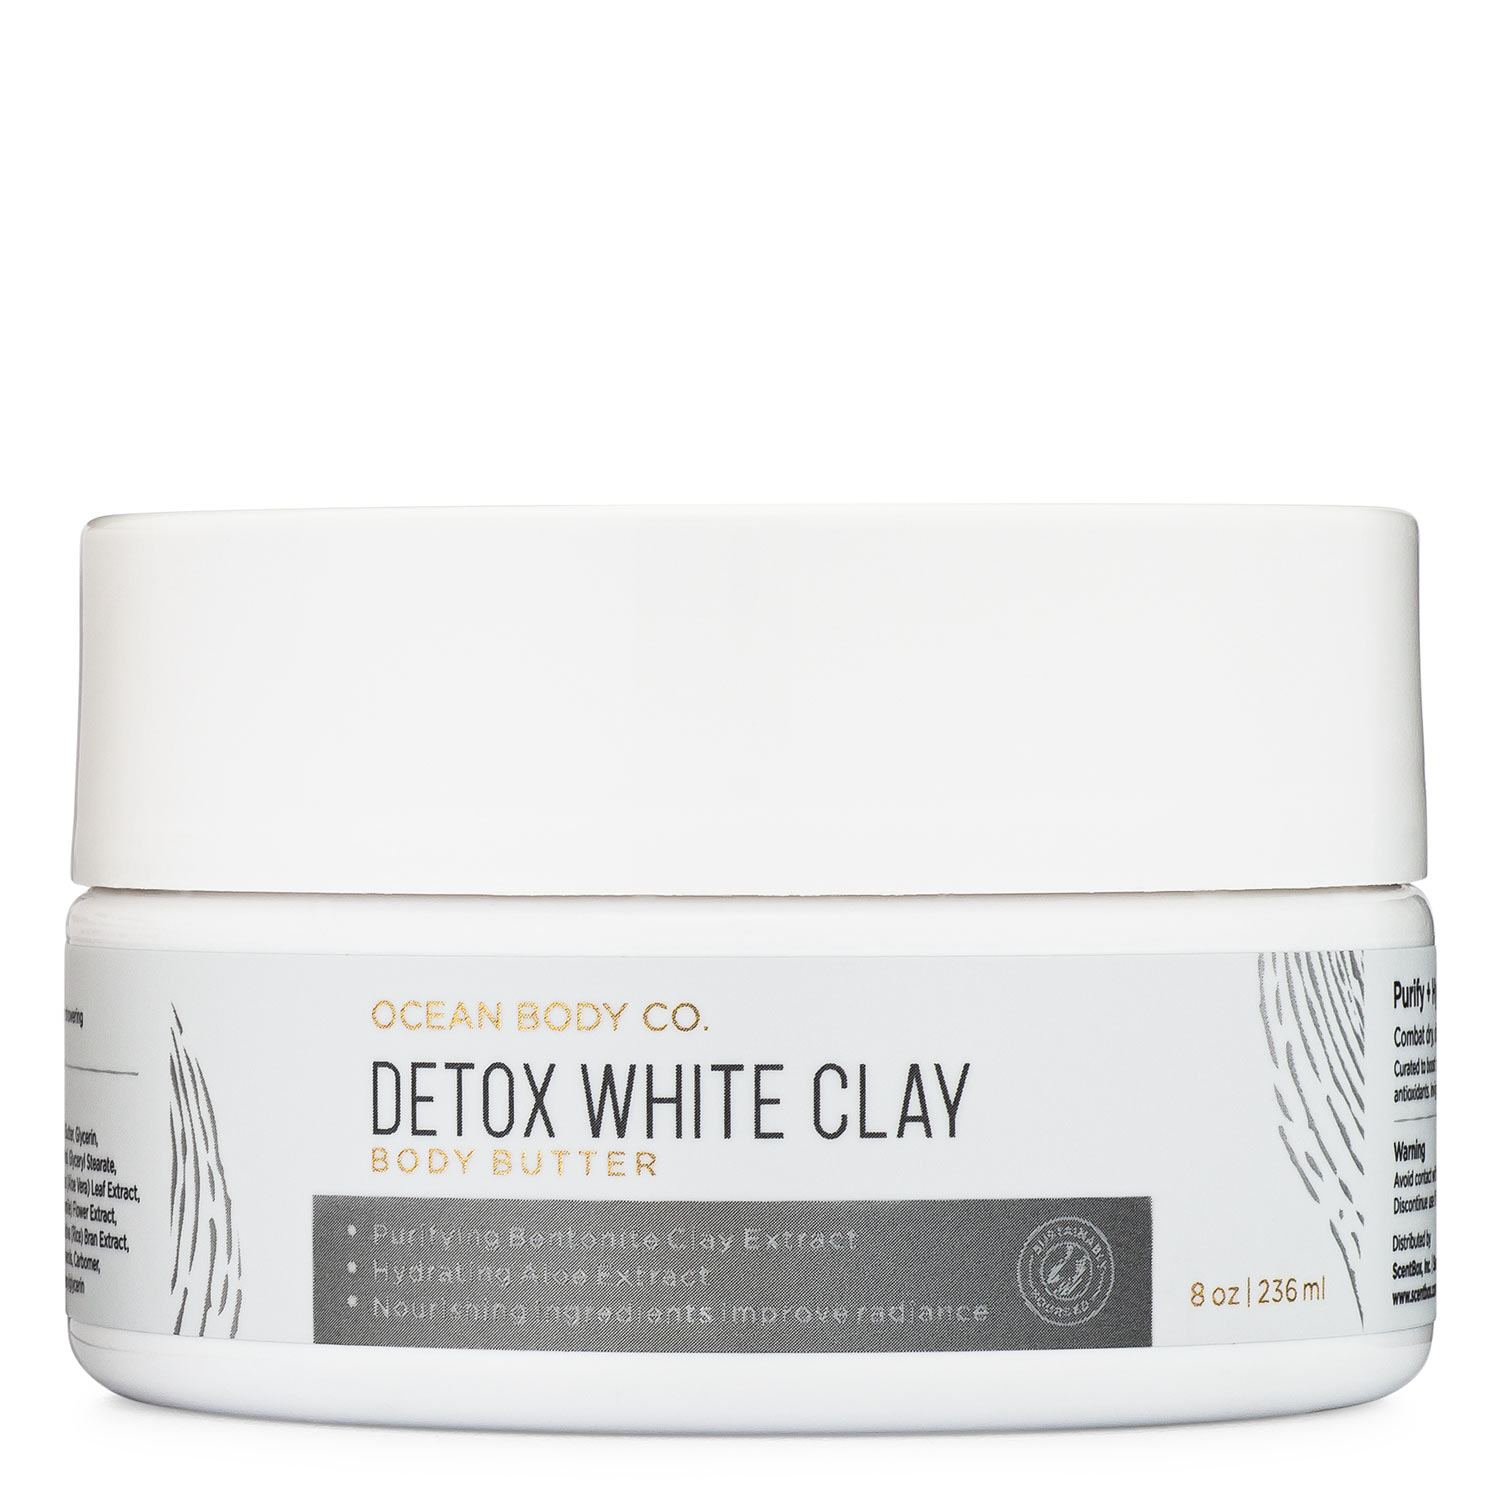 Detox-White-Clay-Body-Butter-Ocean-Body-Co.